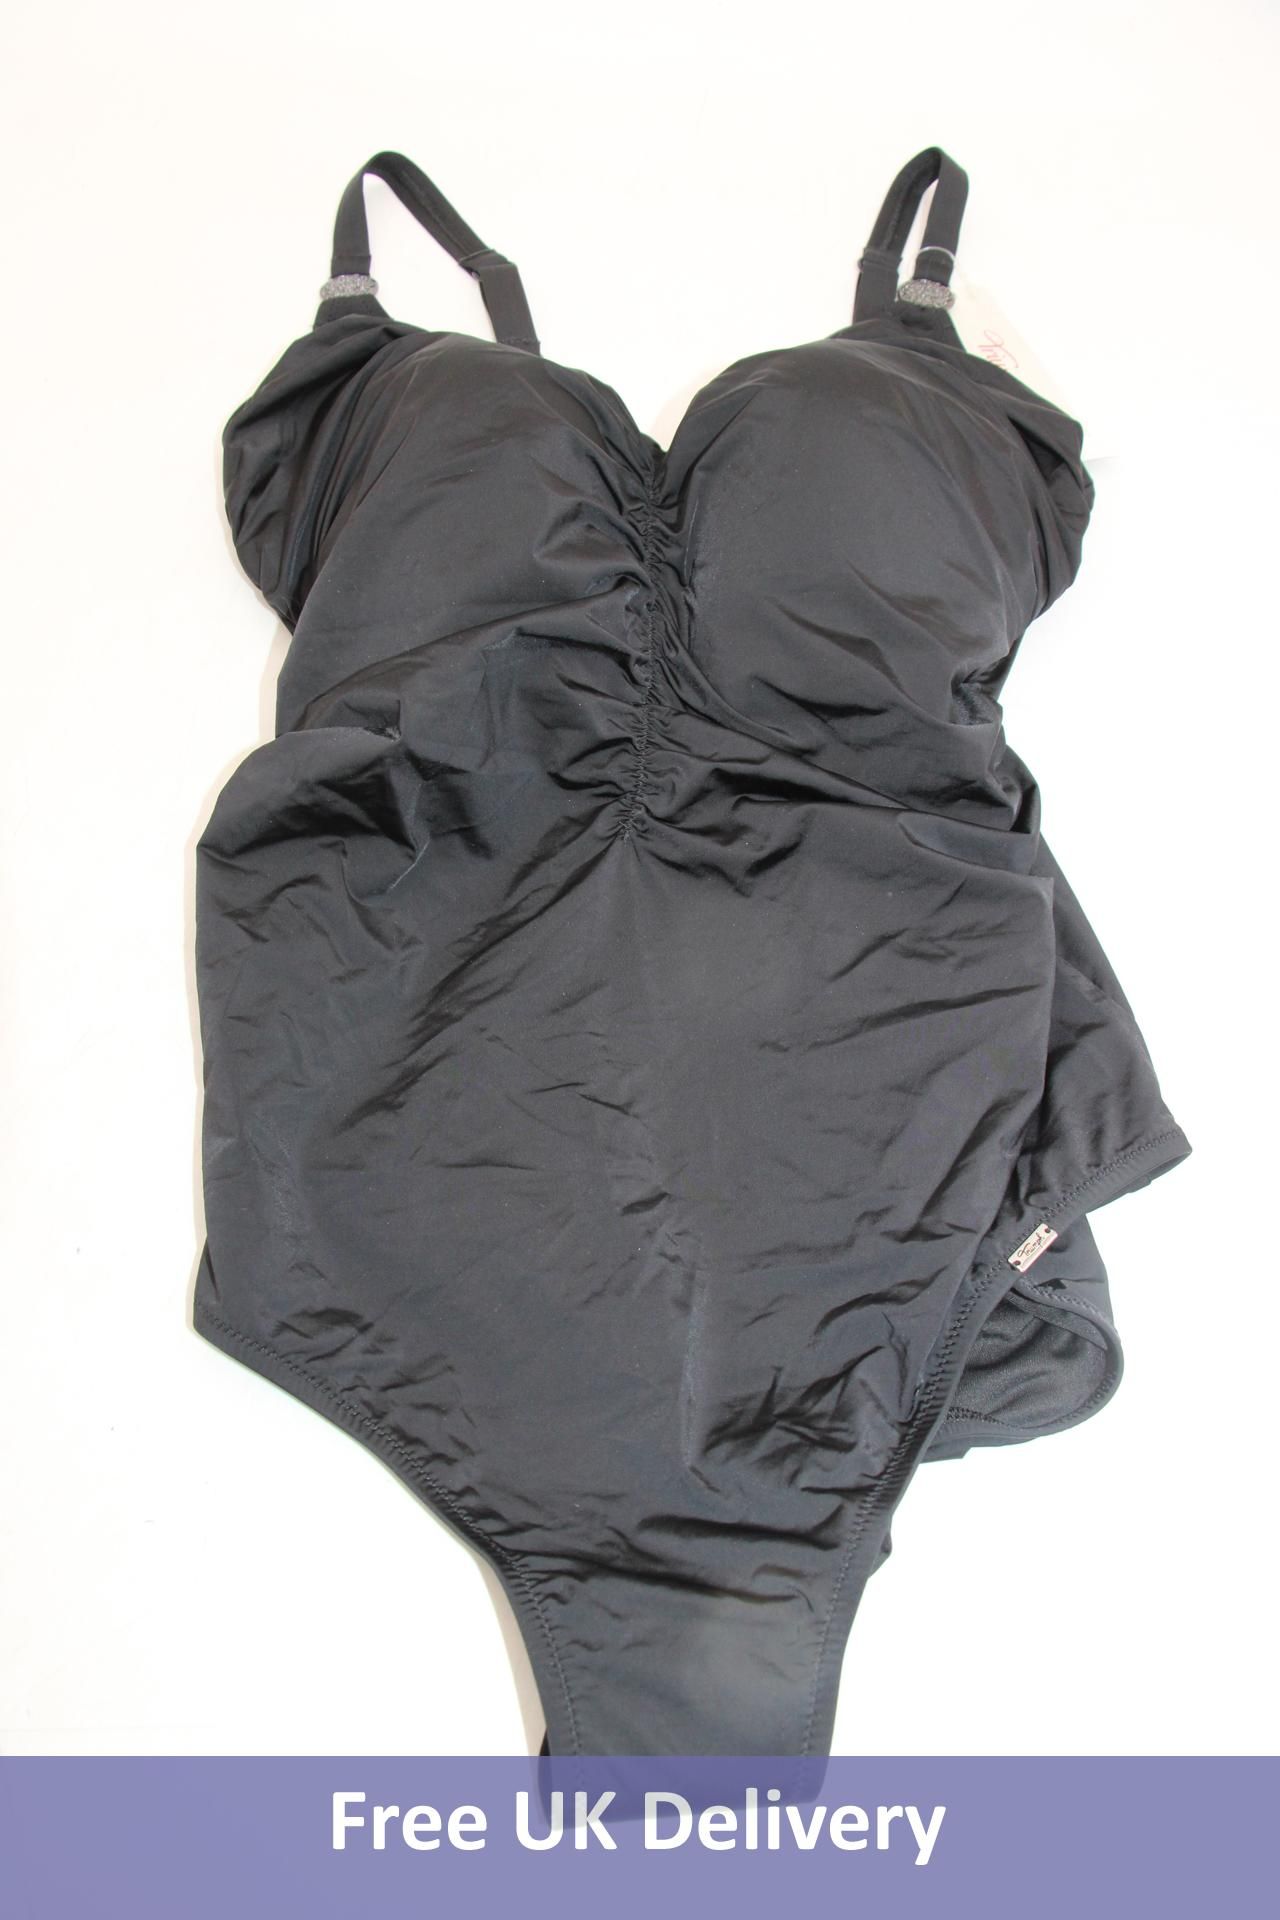 Truimph Padded Cups Swimsuit, Black, Size EU 44E